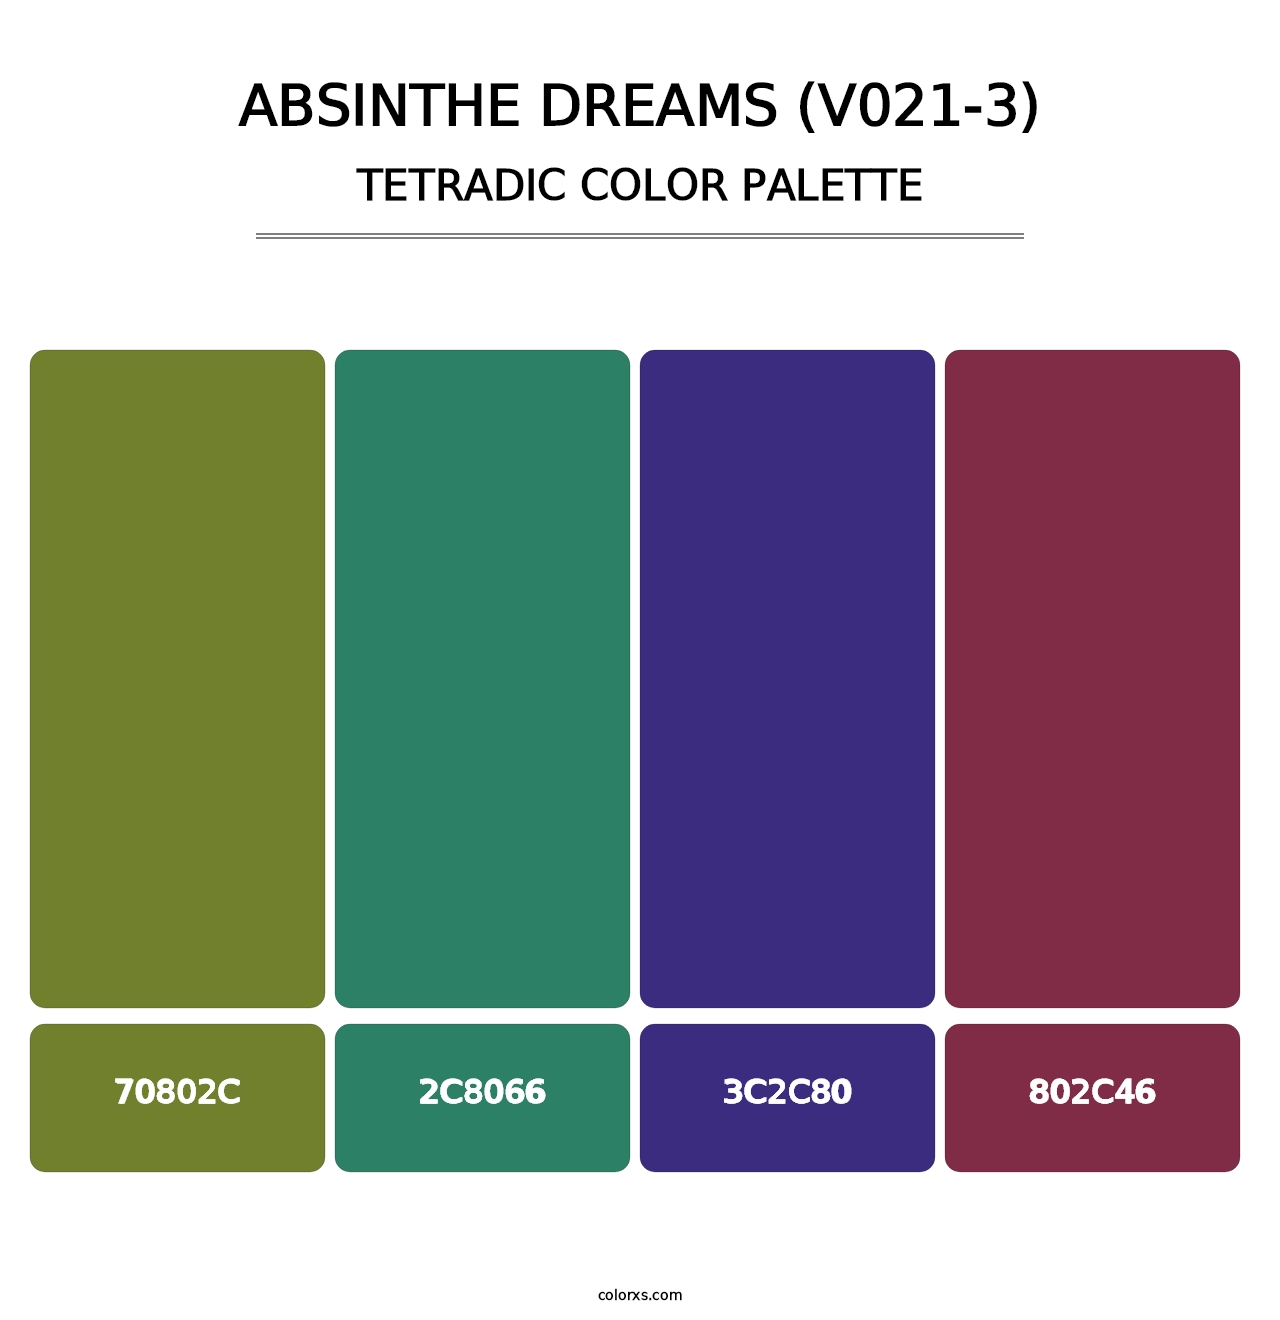 Absinthe Dreams (V021-3) - Tetradic Color Palette